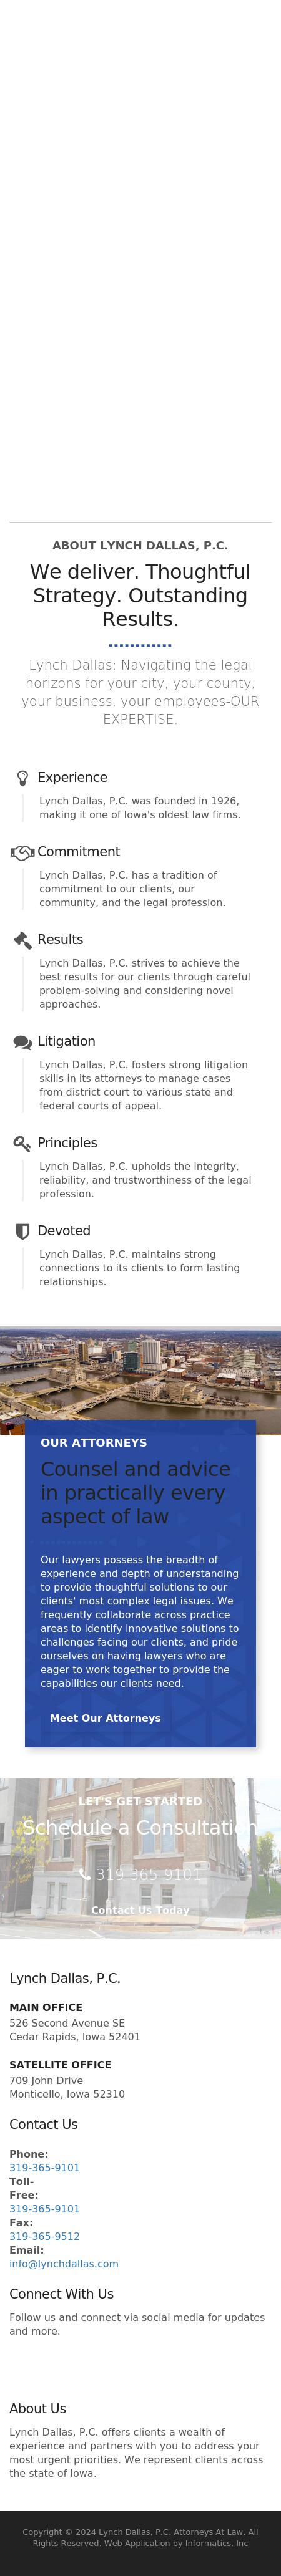 Lynch Dallas PC - Cedar Rapids IA Lawyers